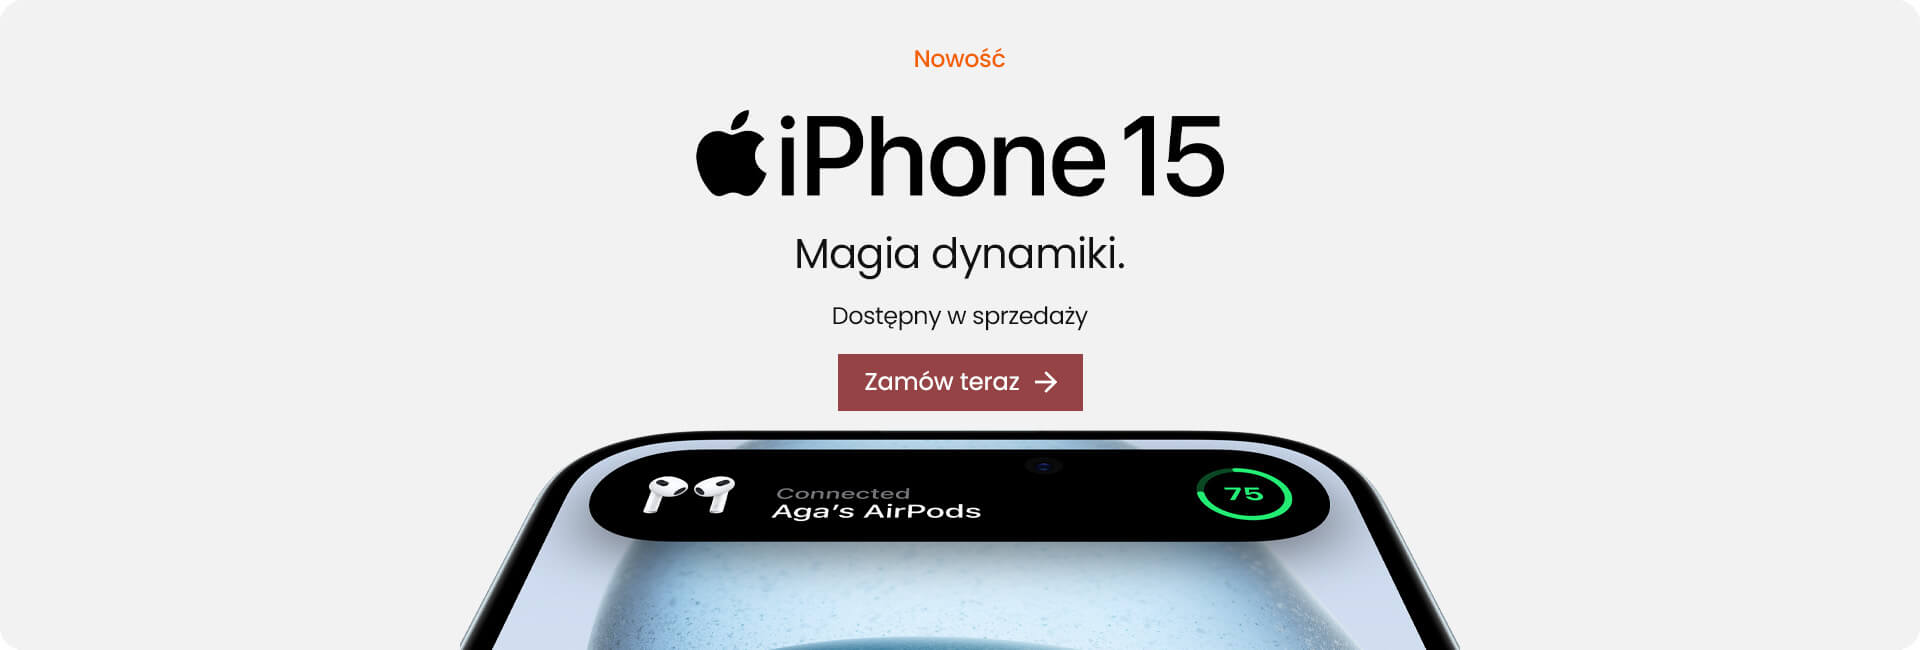 iPhone 15 - Magia dynamiki